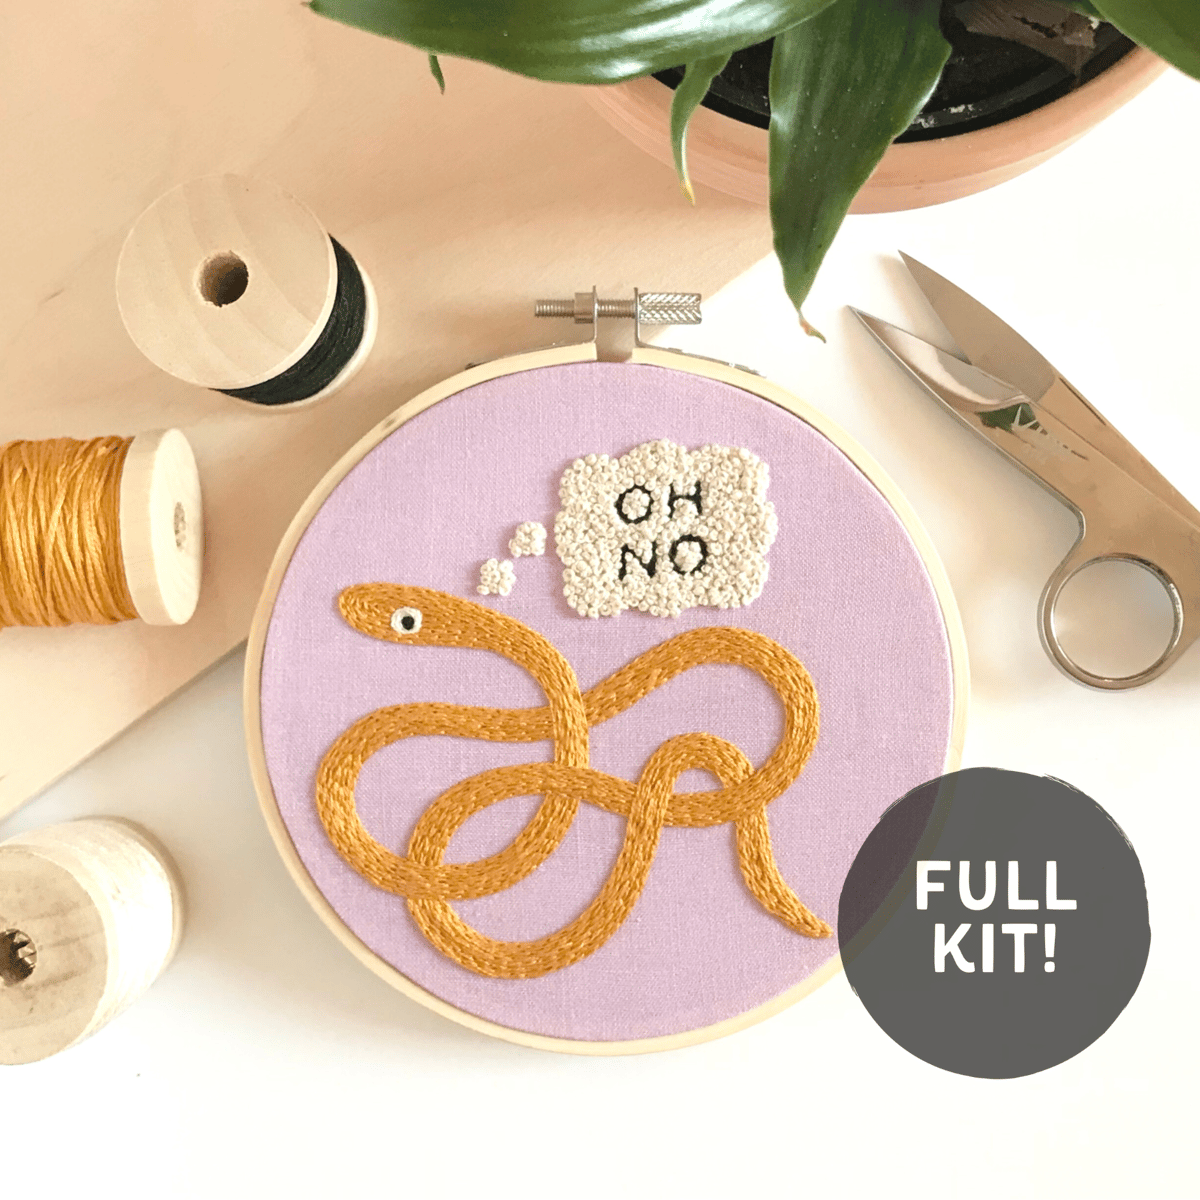 "Oh No" - Tangled Snake - Hand Embroidery Kit - FULL KIT!